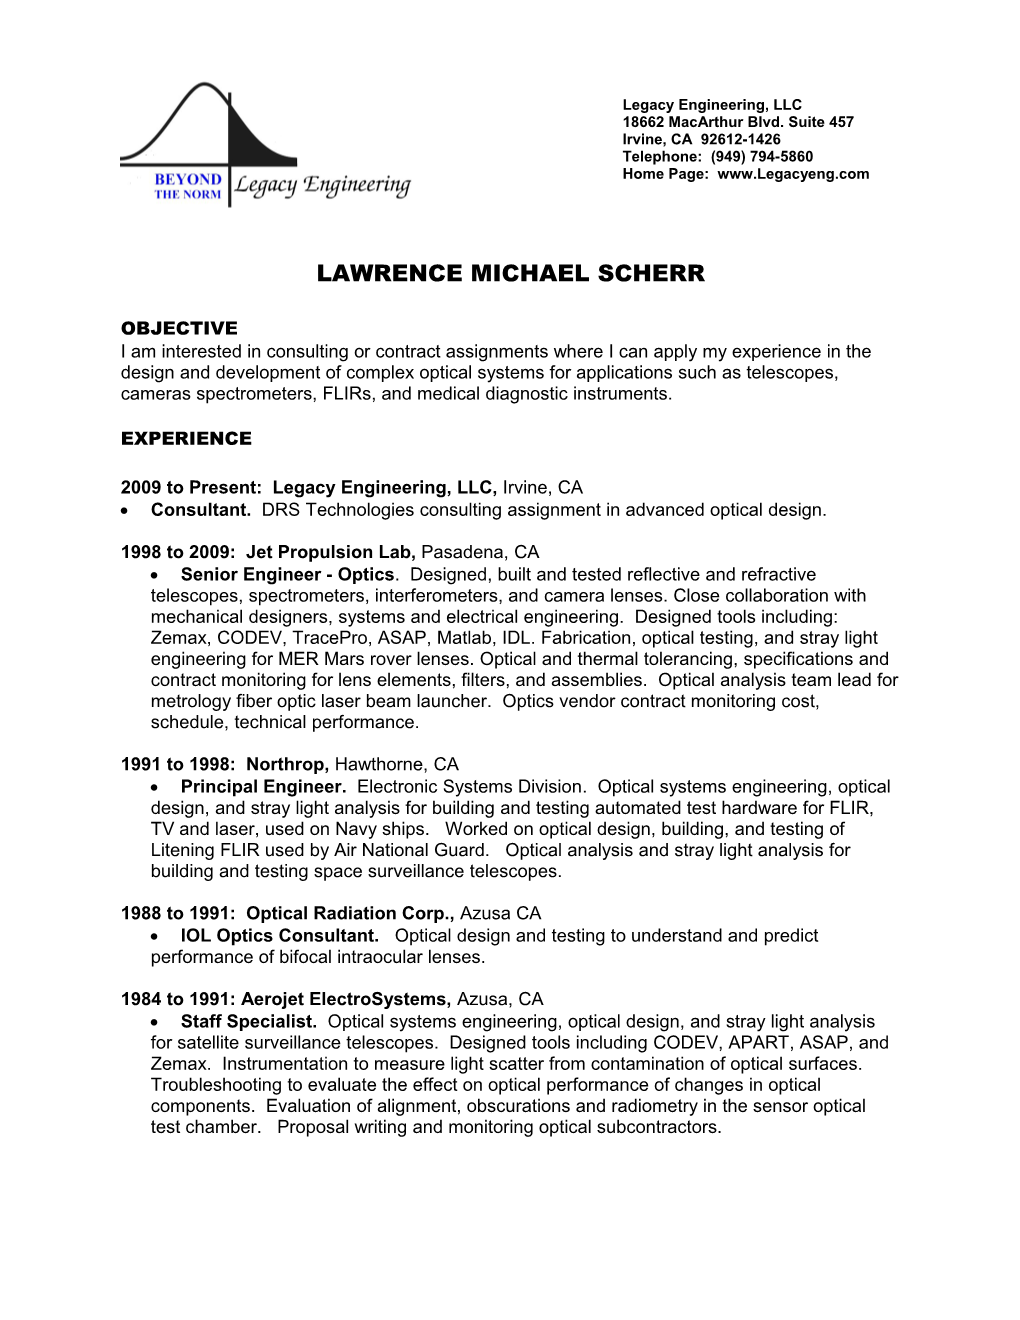 2009 to Present: Legacy Engineering, LLC, Irvine, CA